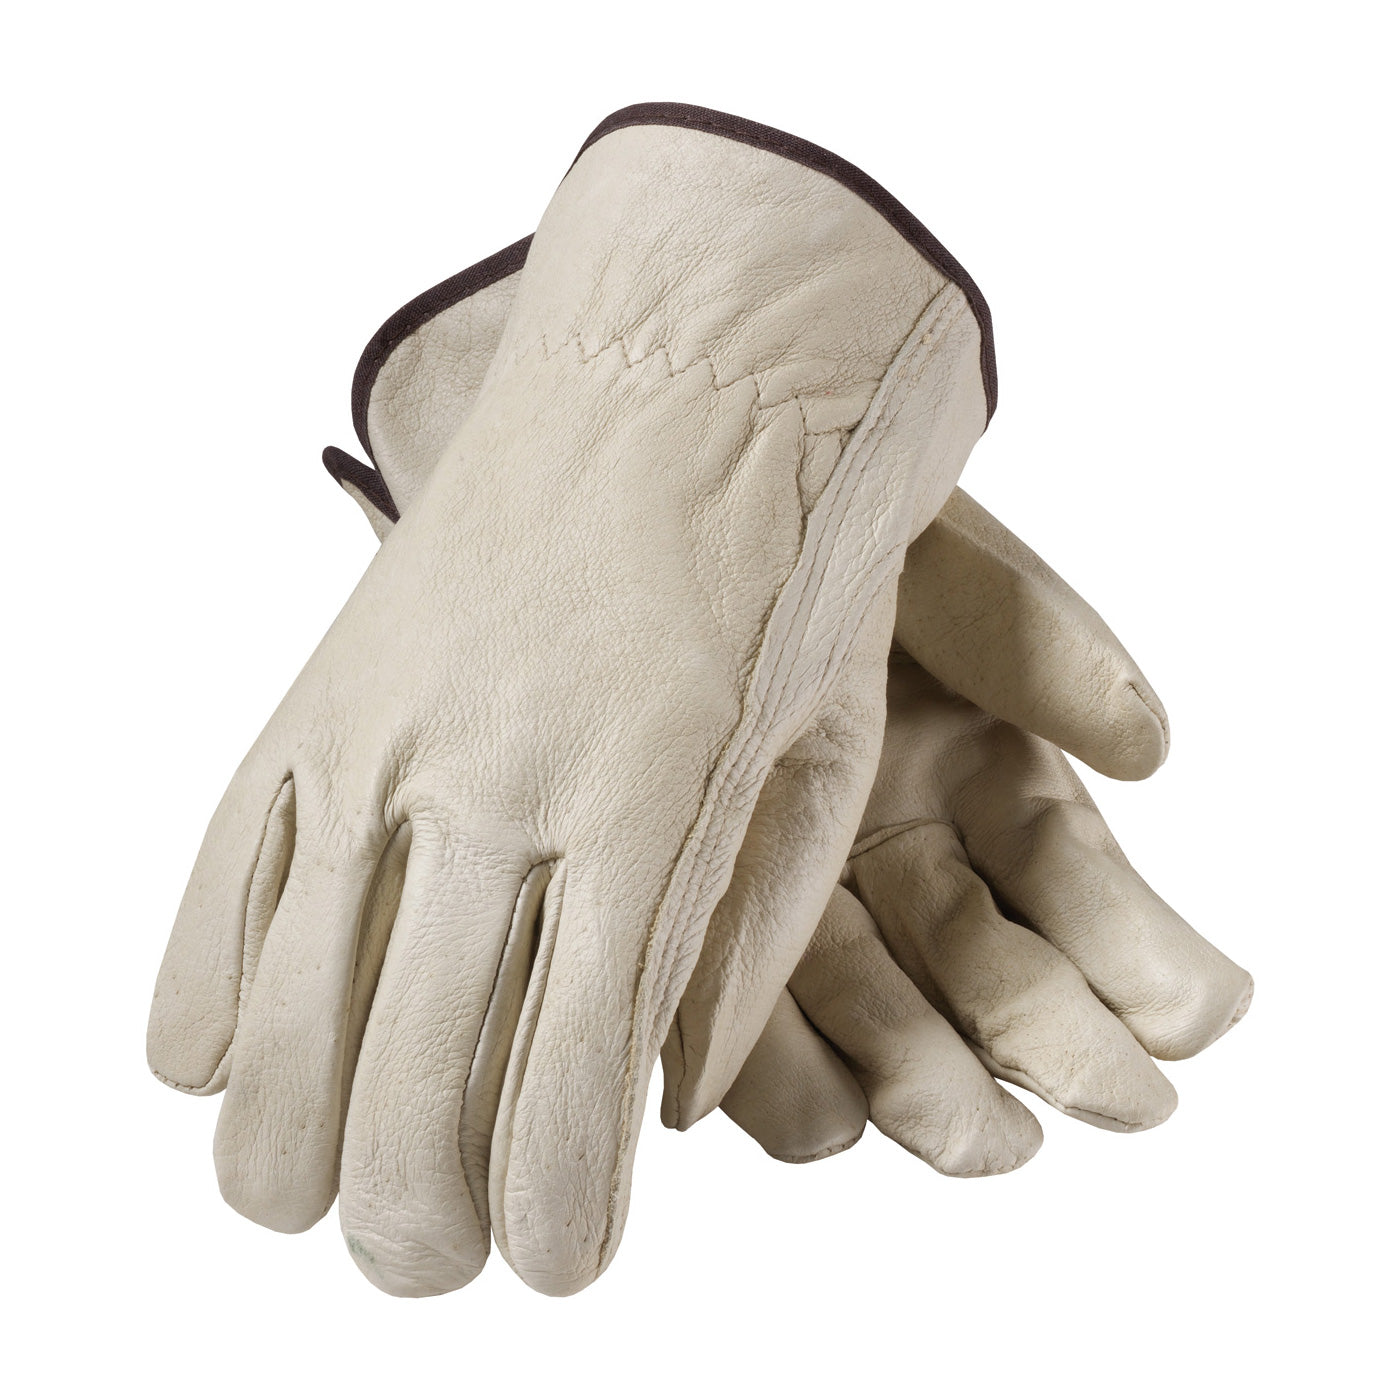 PIP 70-361/S Economy Grade Top Grain Pigskin Leather Drivers Glove - Keystone Thumb